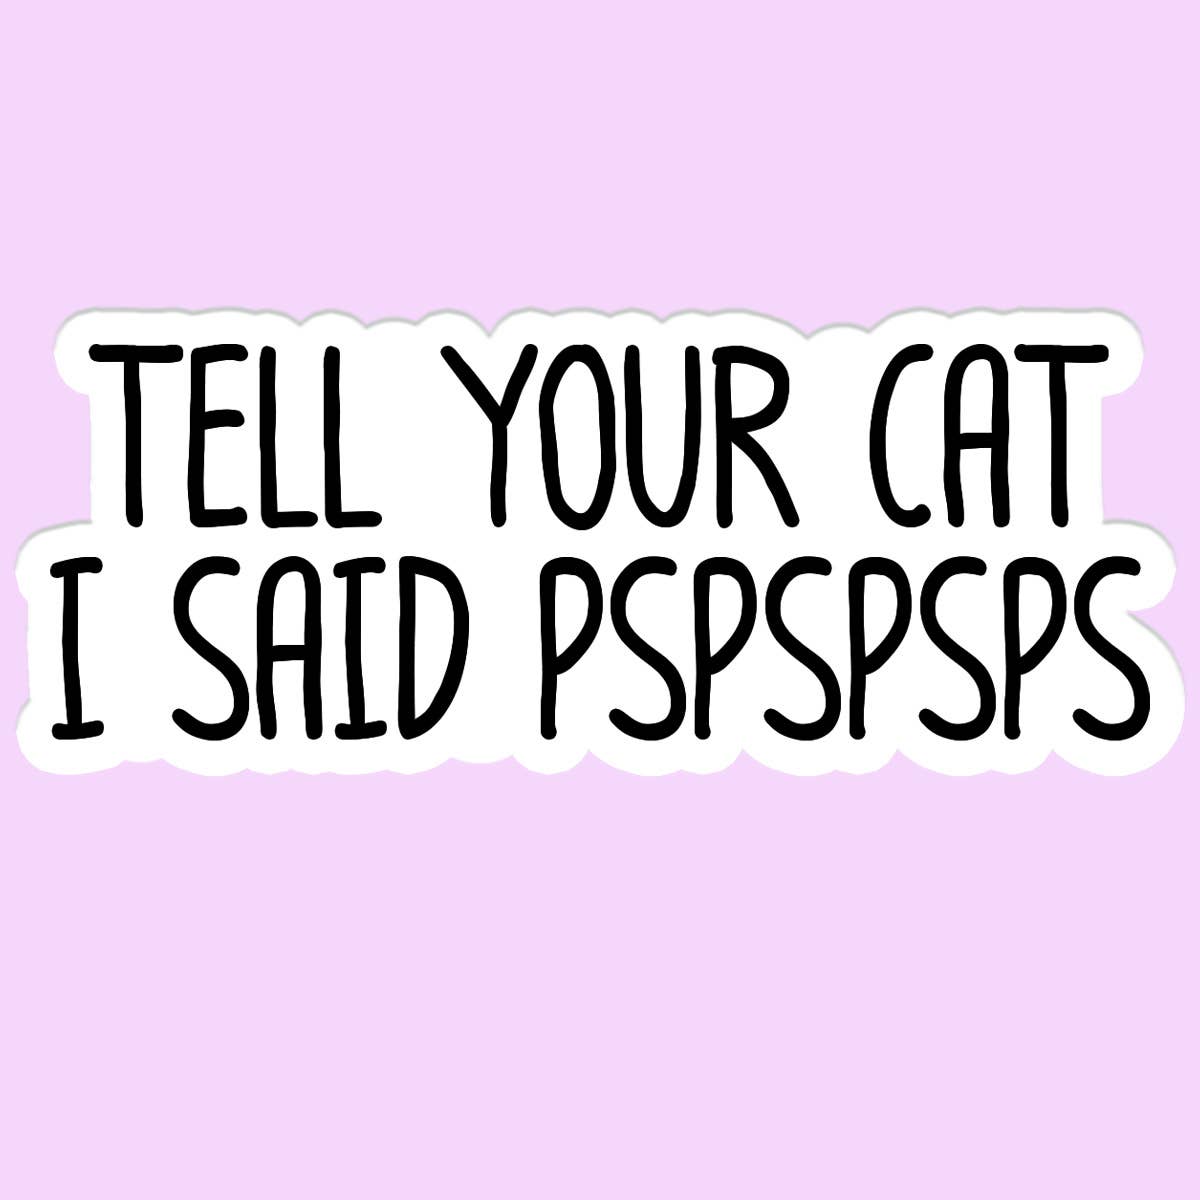 Tell Your Cat I said PSPSPS Sticker